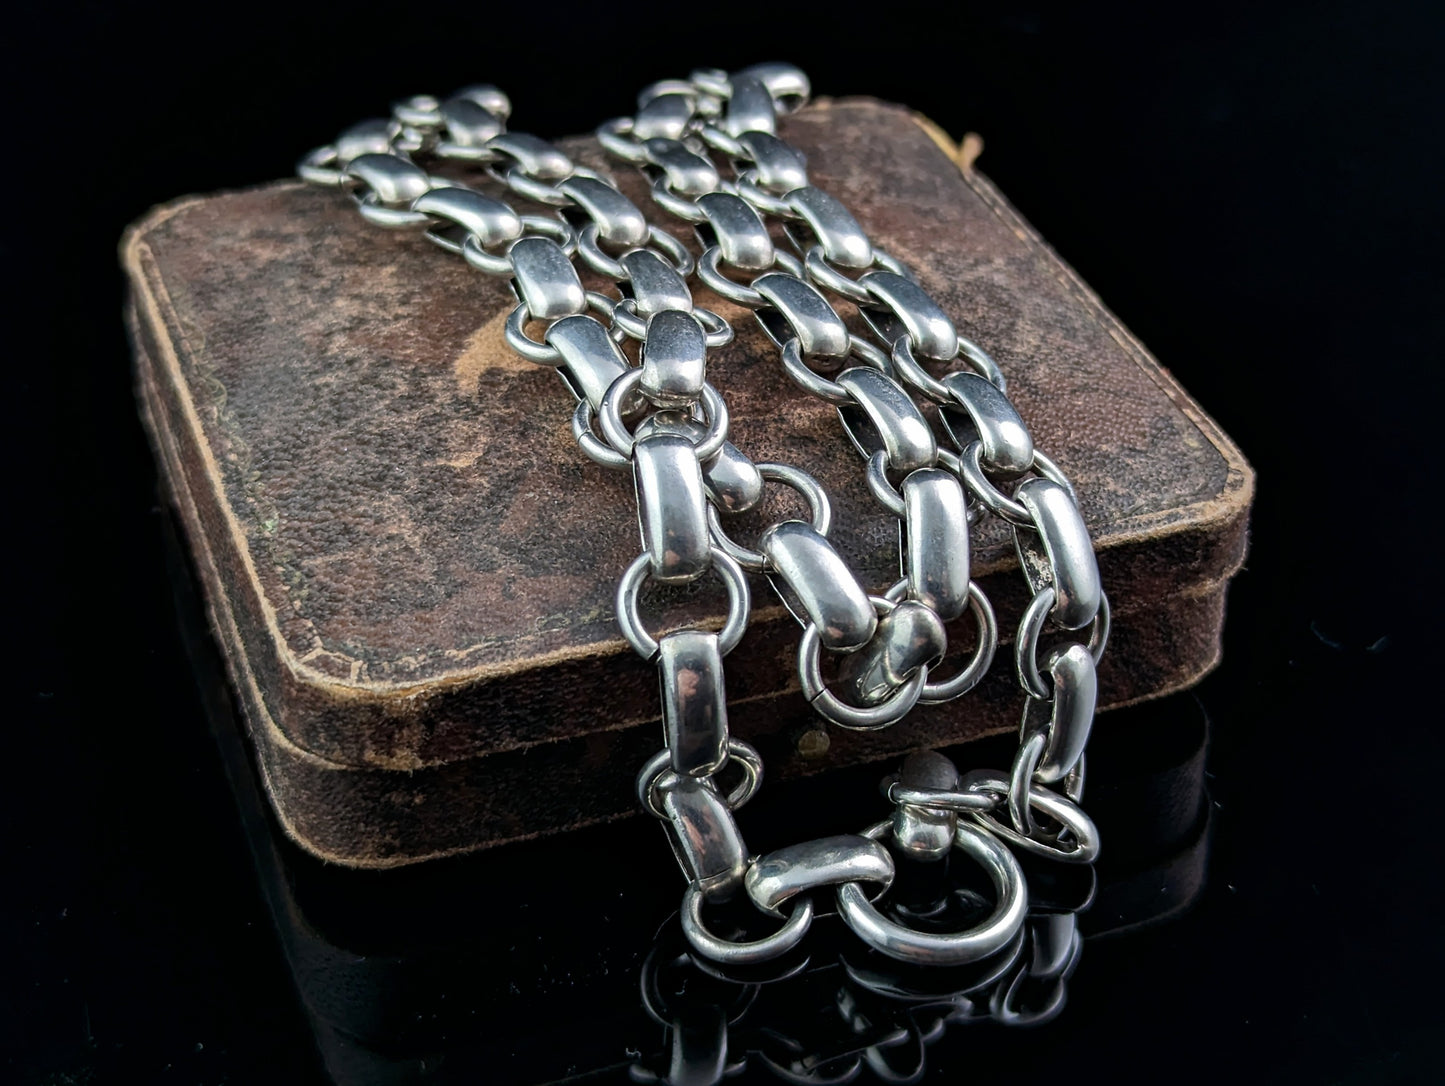 Antique silver book chain collar necklace, Victorian